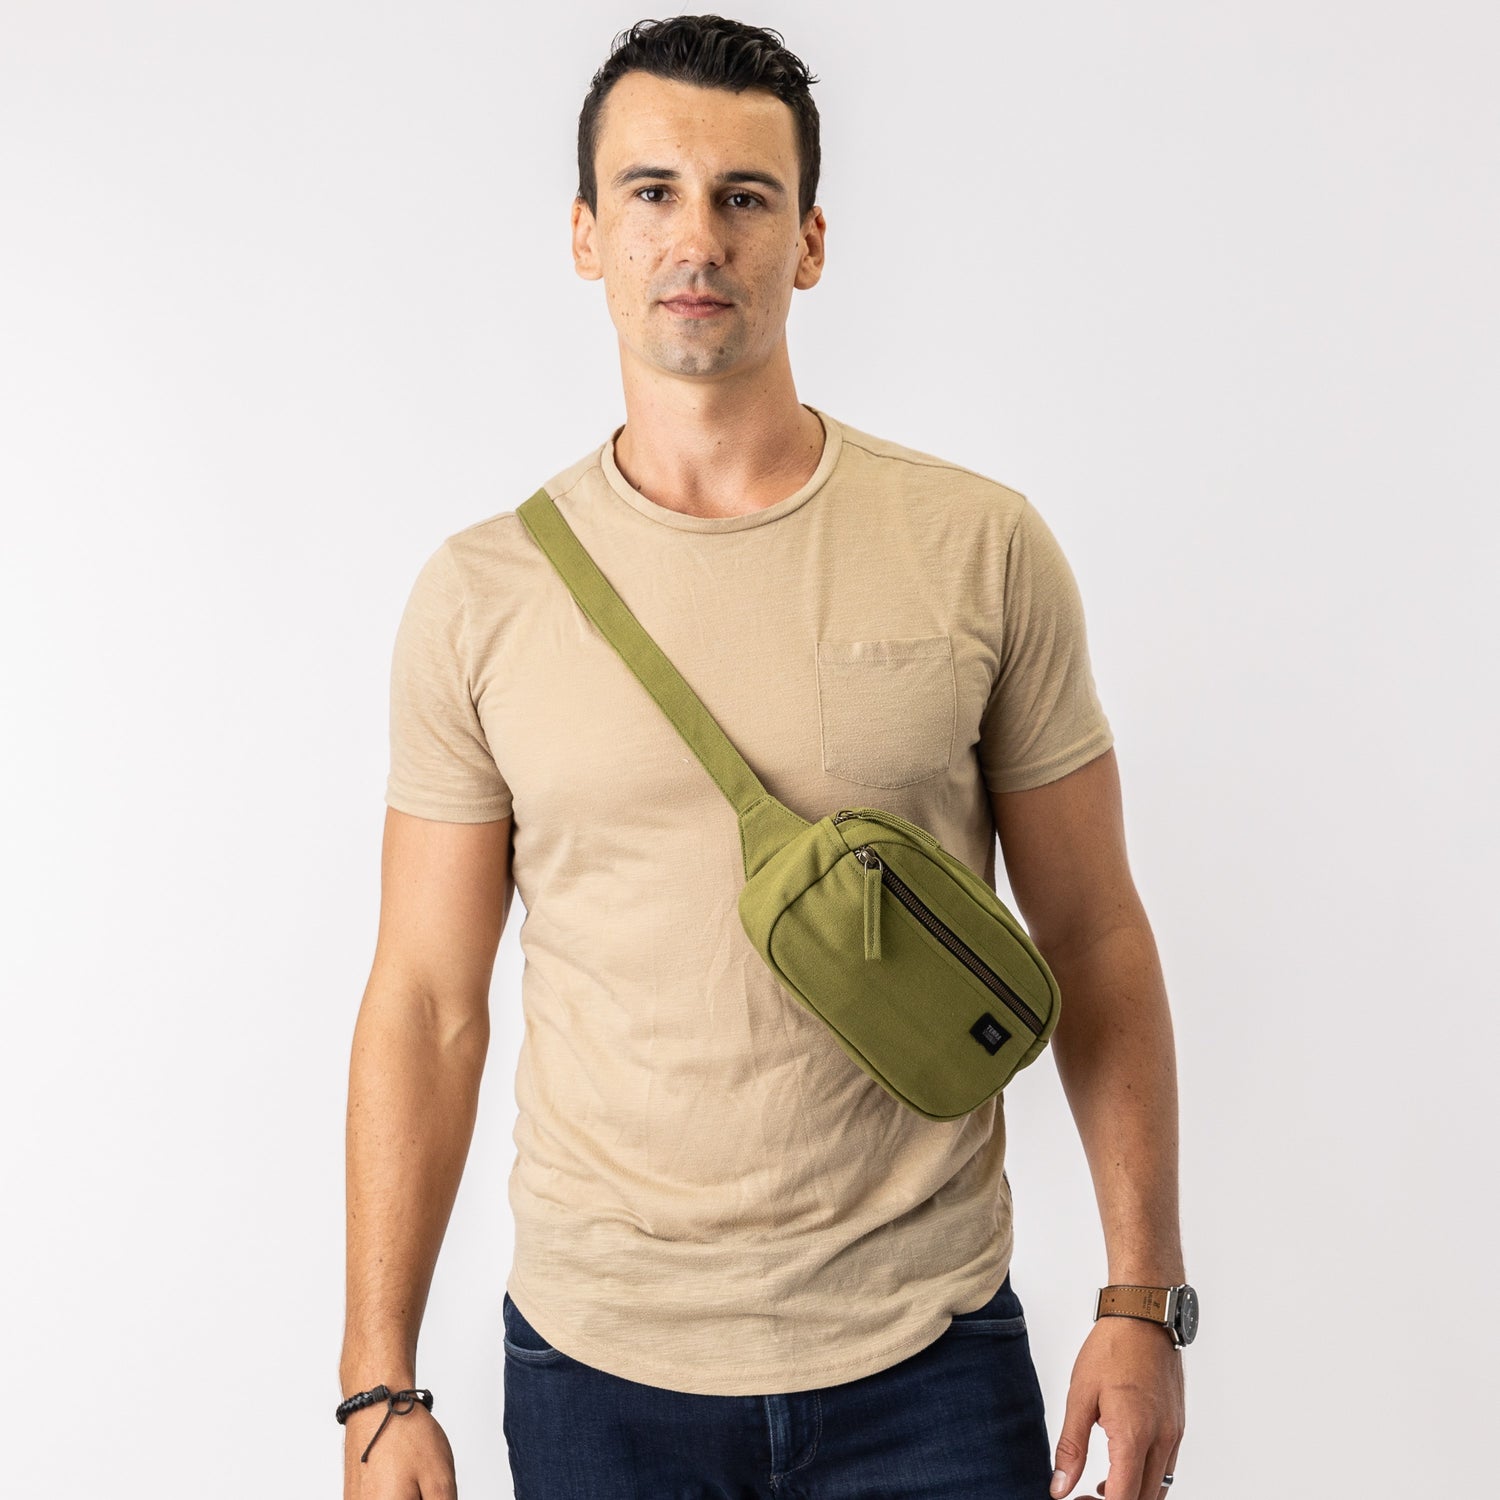 Plus Size - Mini Belt Bag - Long Strap 56 - Extended Strap - Women Fanny  Pack - Stylish Waist Bag - Unisex Men Crossbody Bag - Everywhere Belt Bag